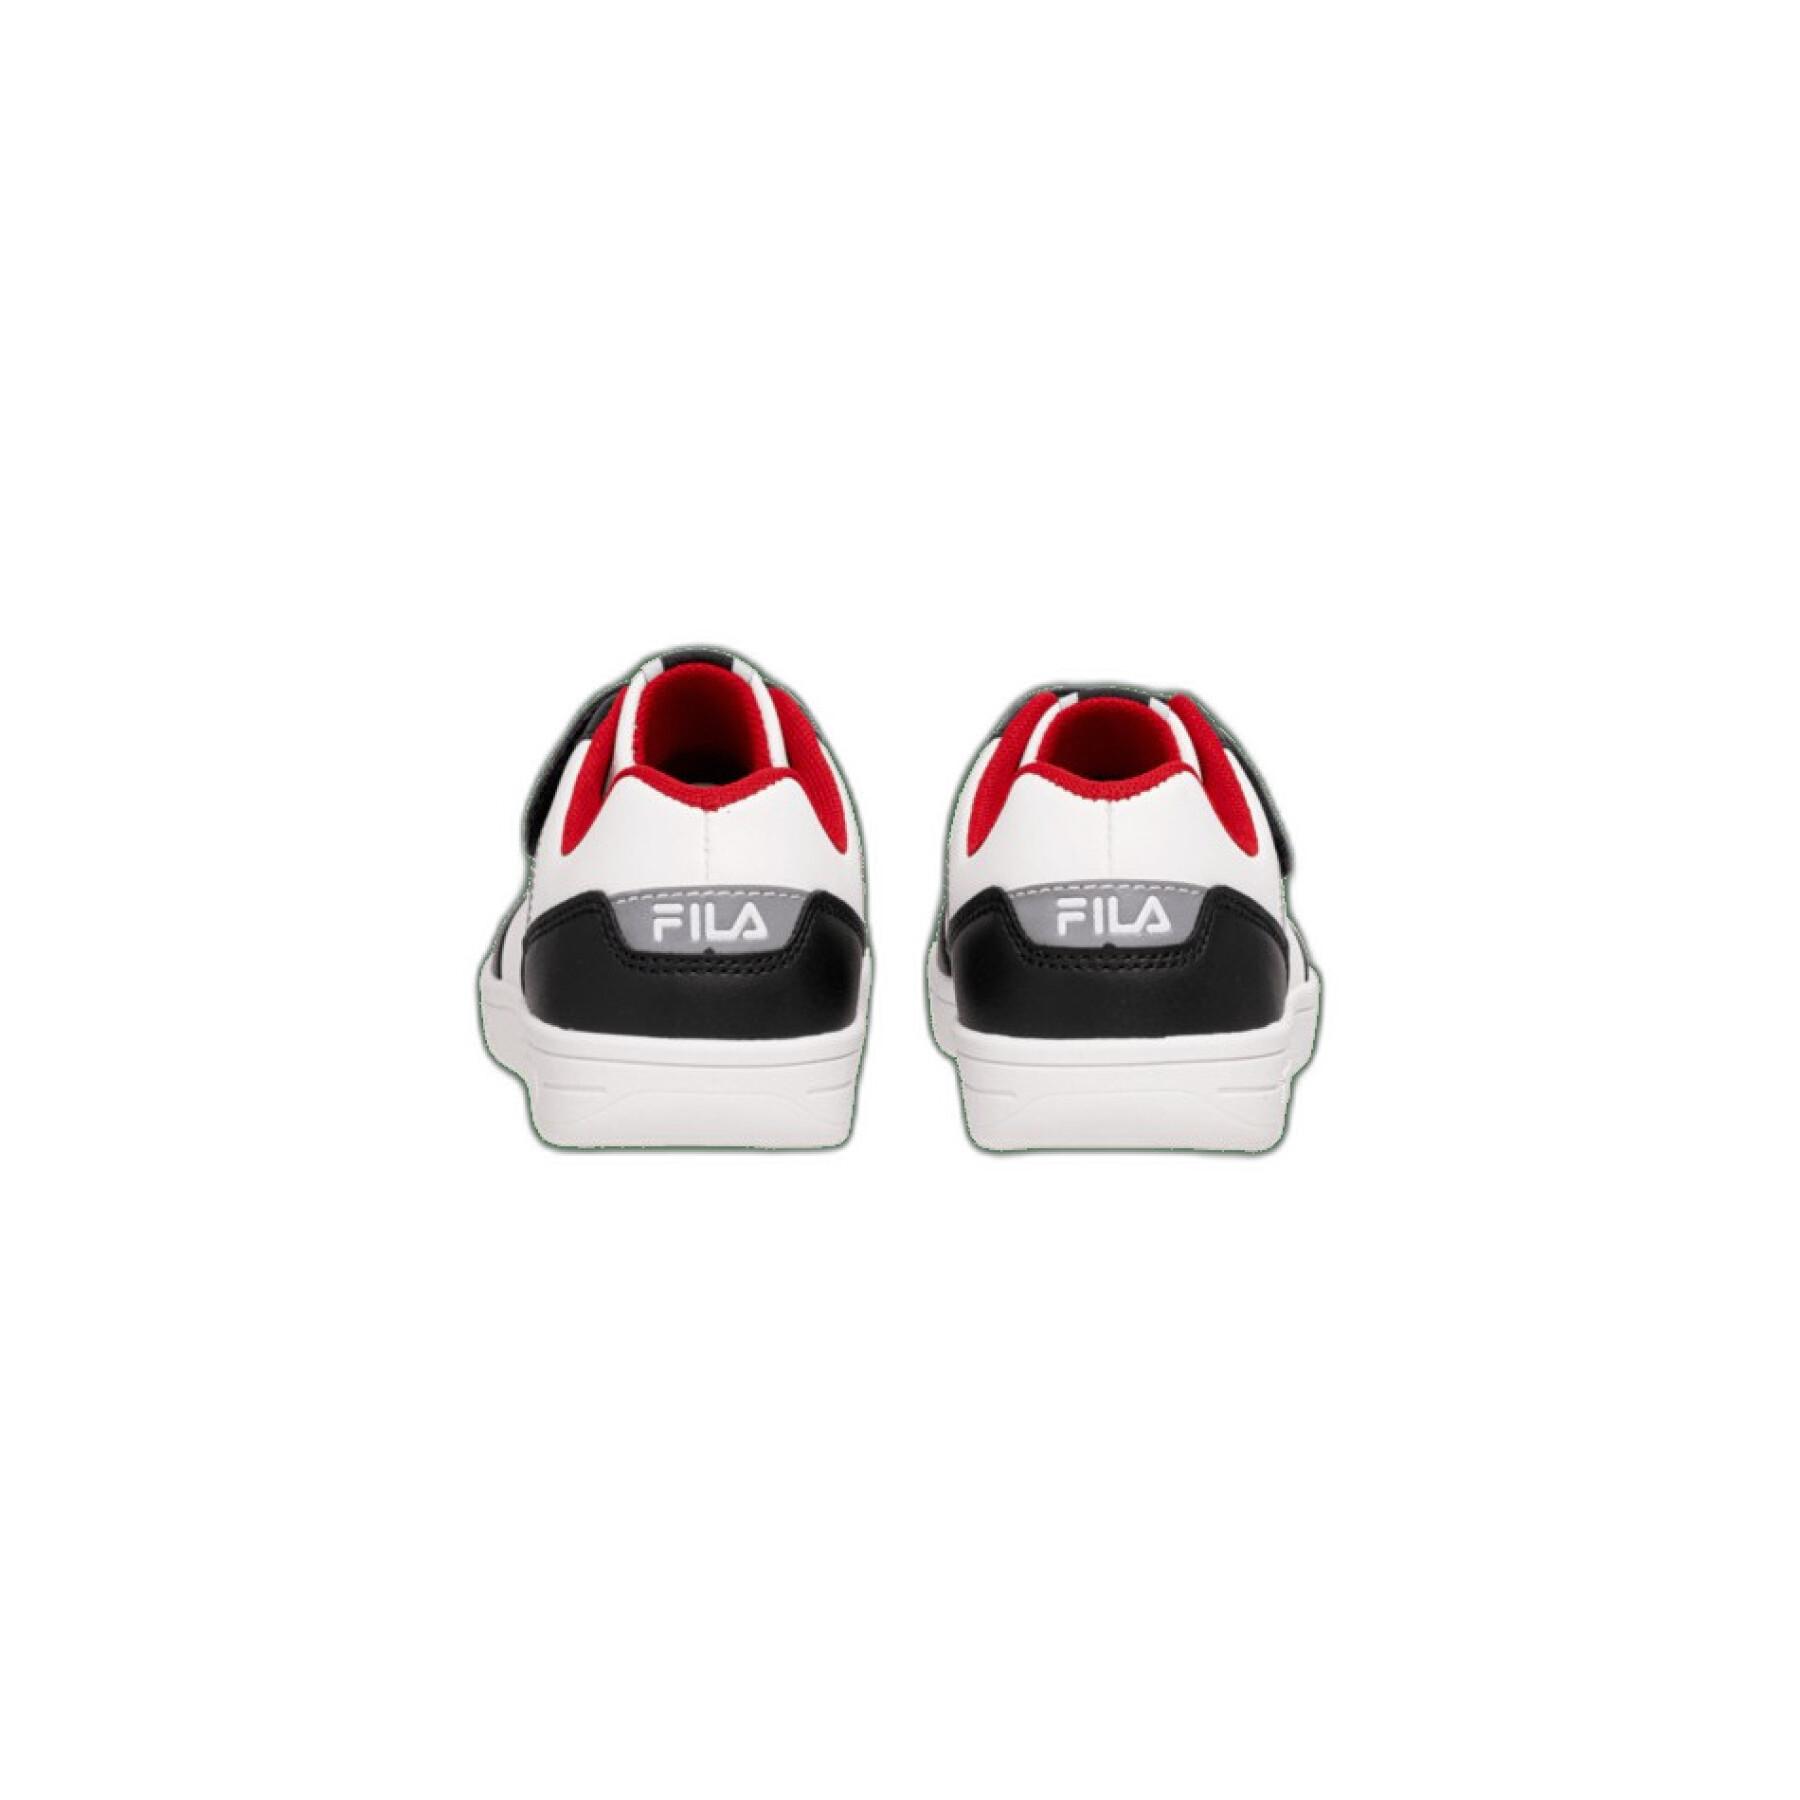 Children\'s sneakers Fila C. Court Cb Velcro - Fila - Brands - Lifestyle